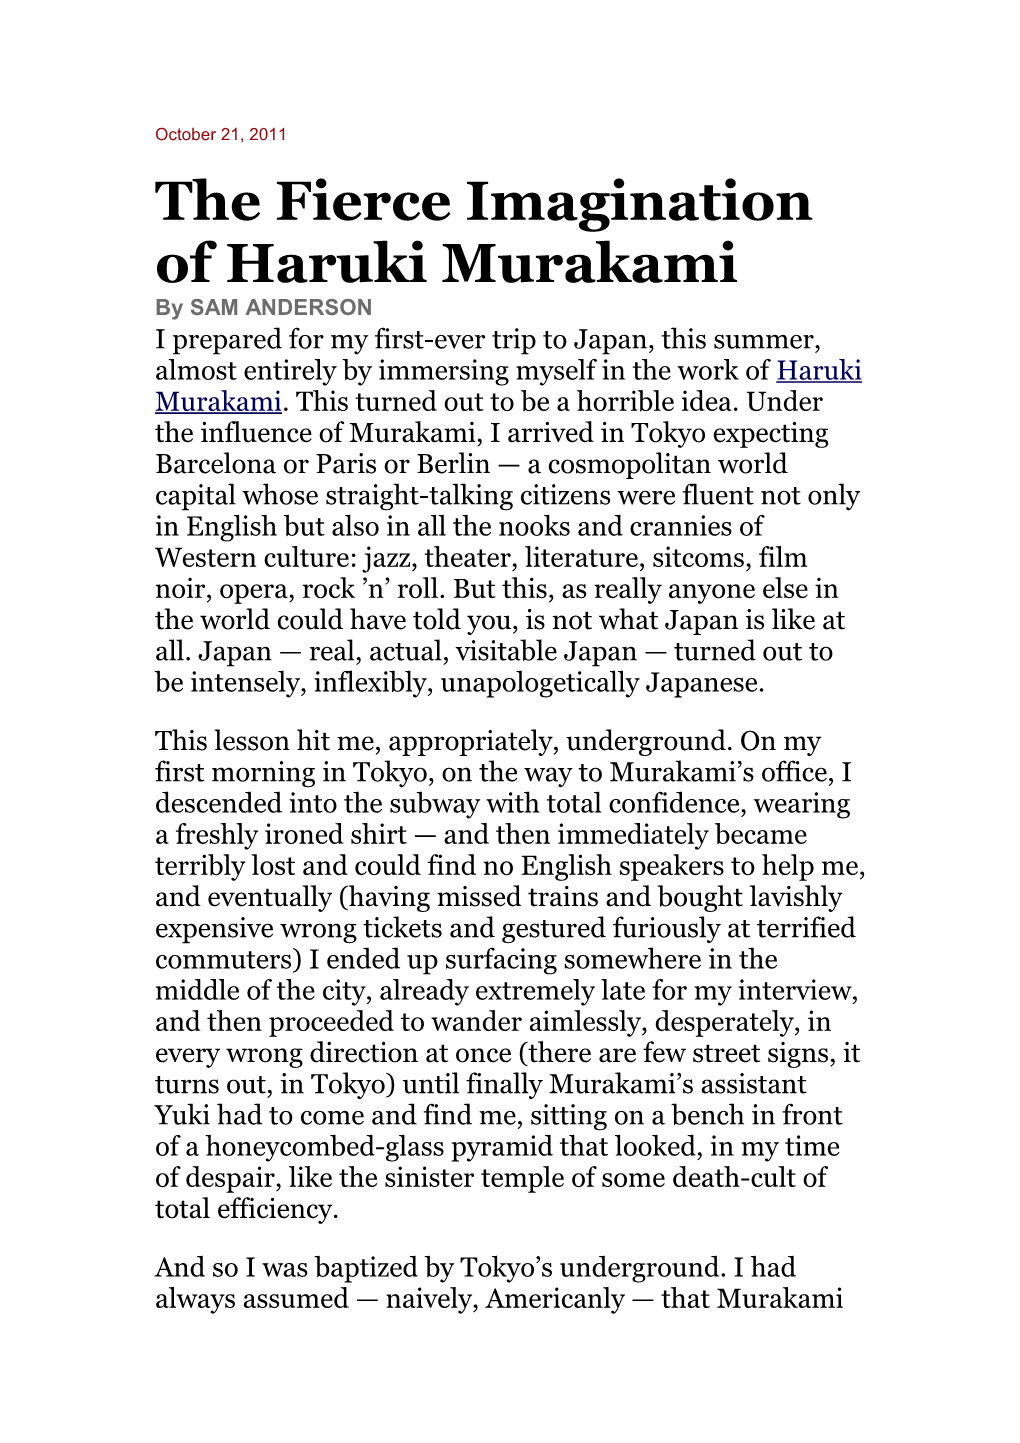 The Fierce Imagination of Haruki Murakami